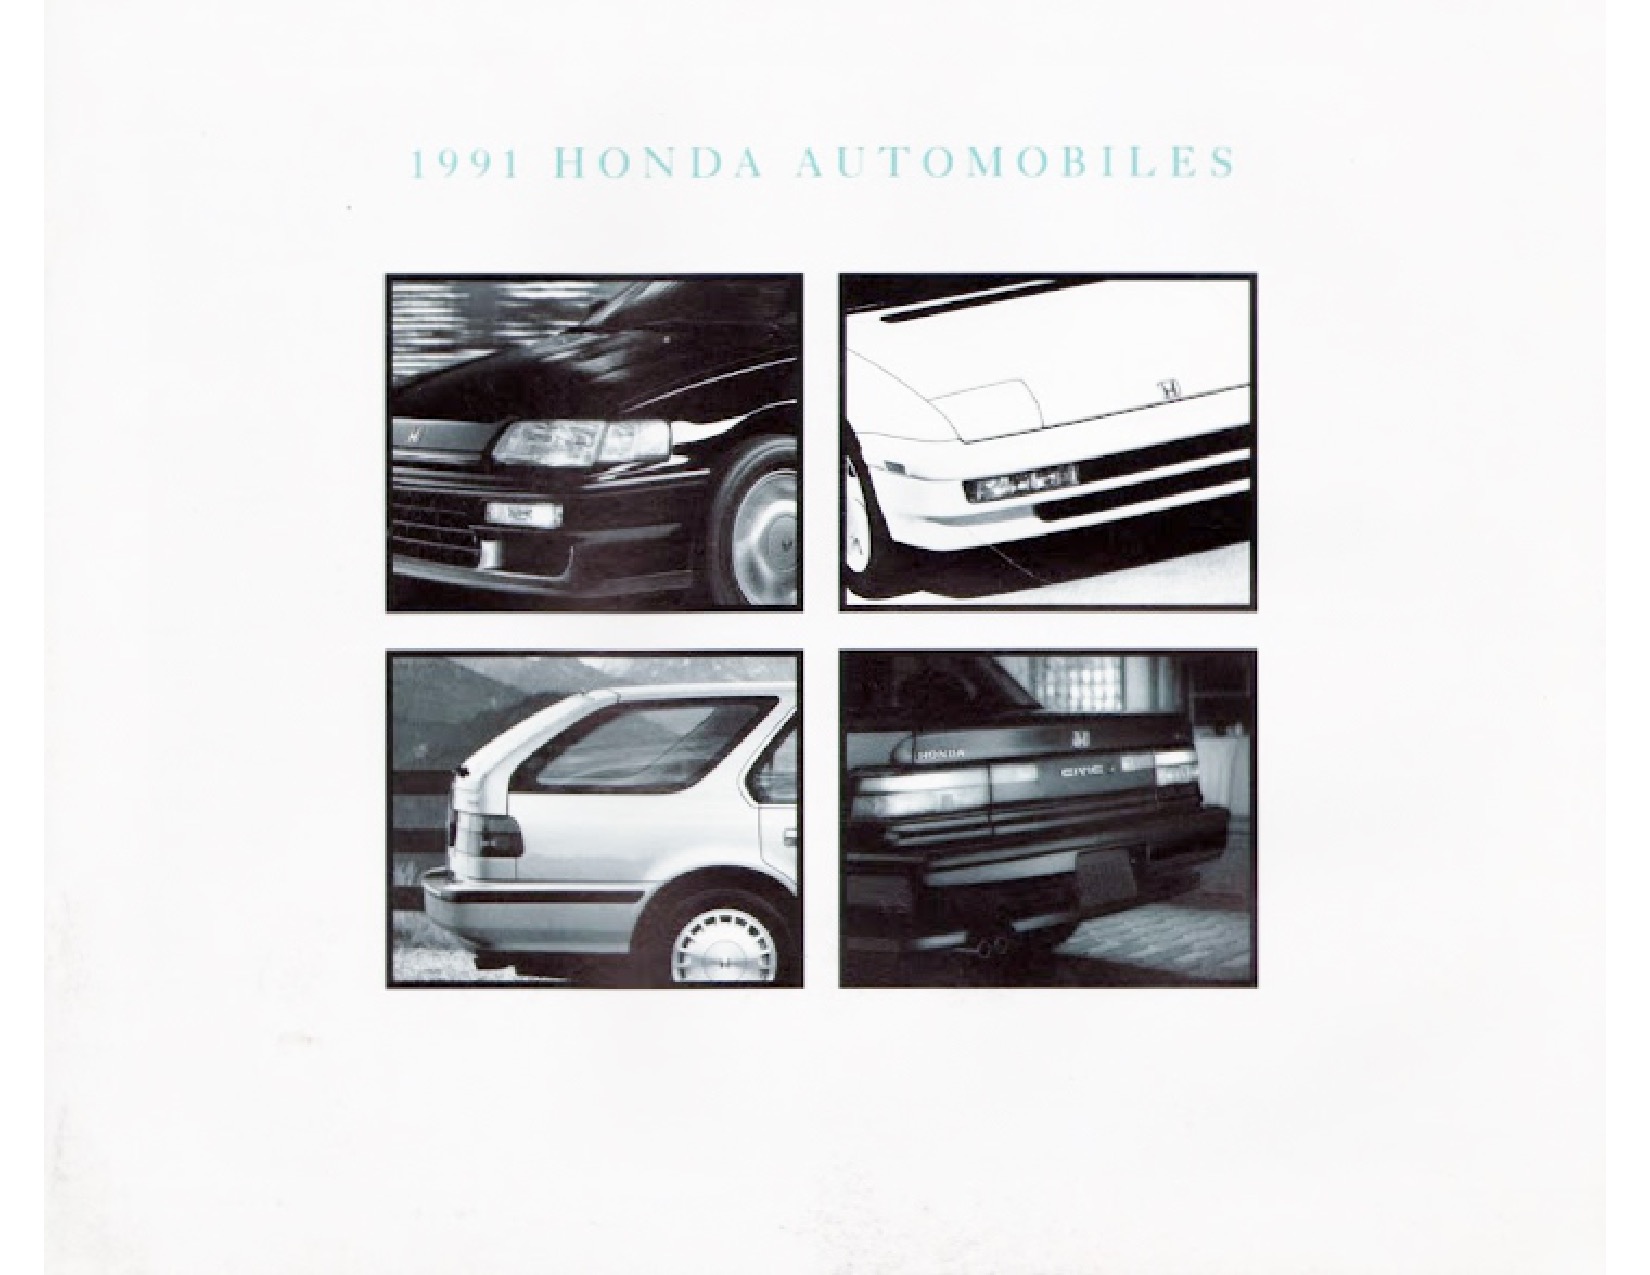 1991 Honda Model Range Brochure